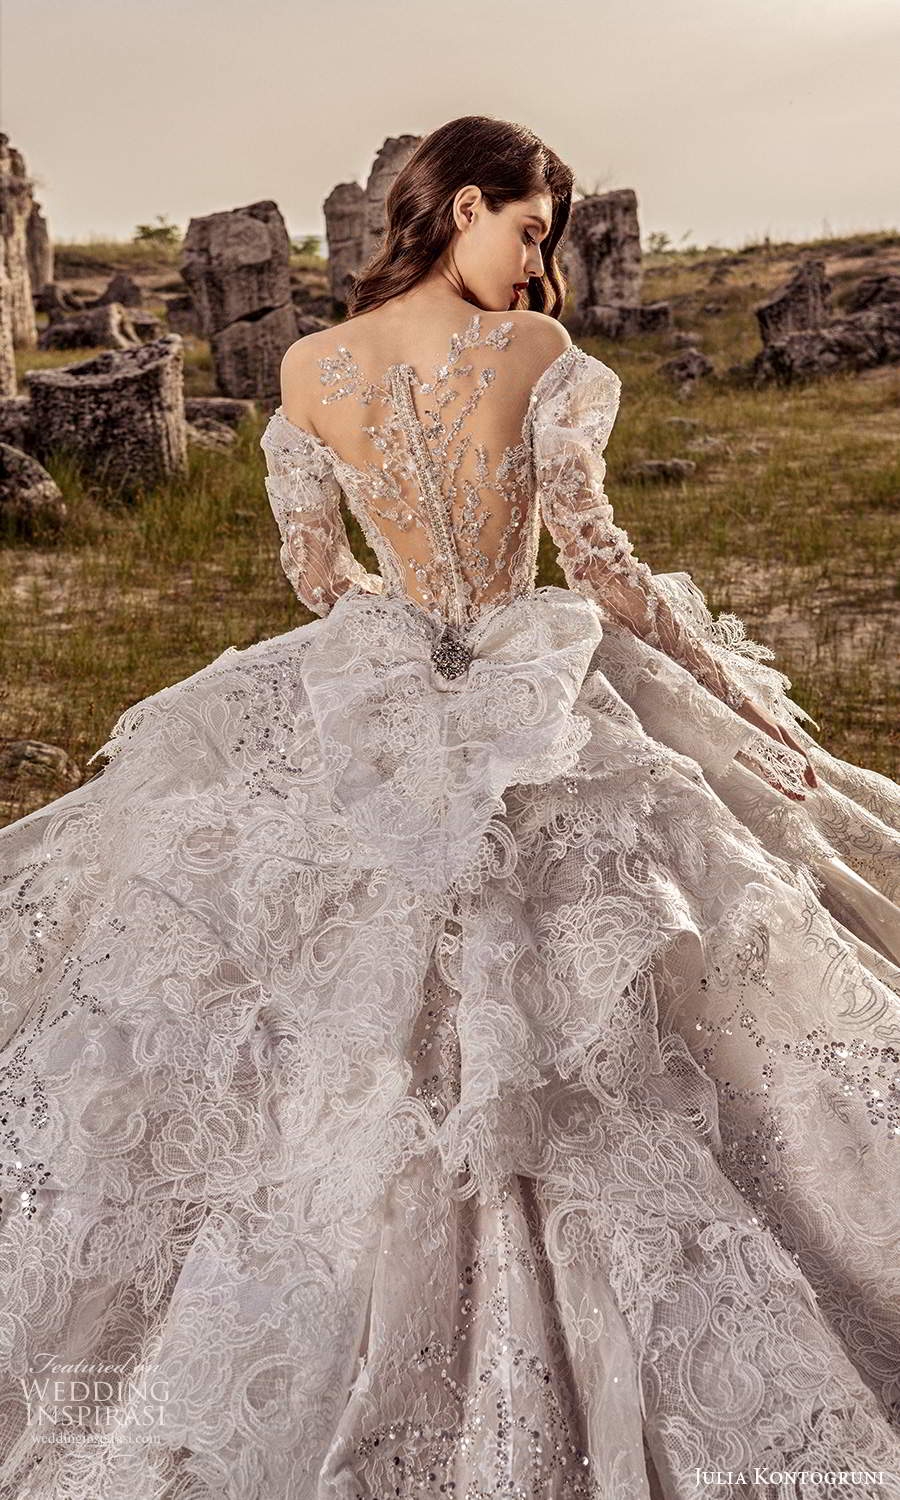 julia kontogruni 2021 bridal sleeves puff sleeves off shoulder sweetheart neckline fully embellished ball gown wedding dress cathedral train (7) zbv